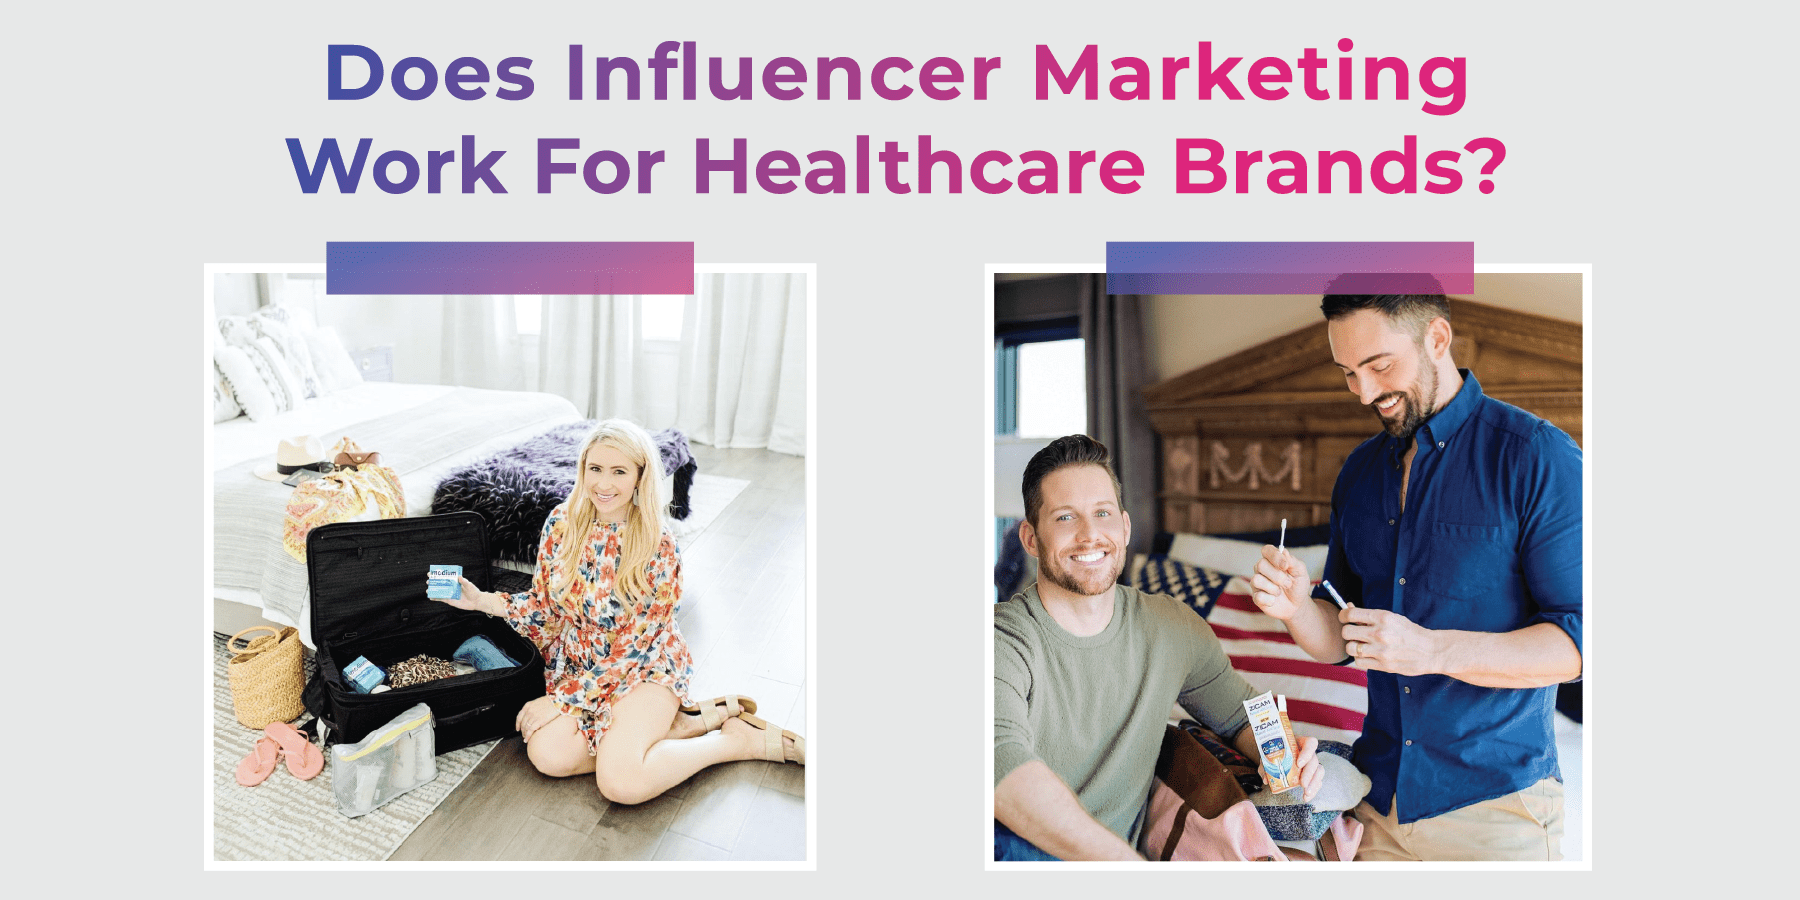 Does Influencer Marketing Work For Healthcare Brands?